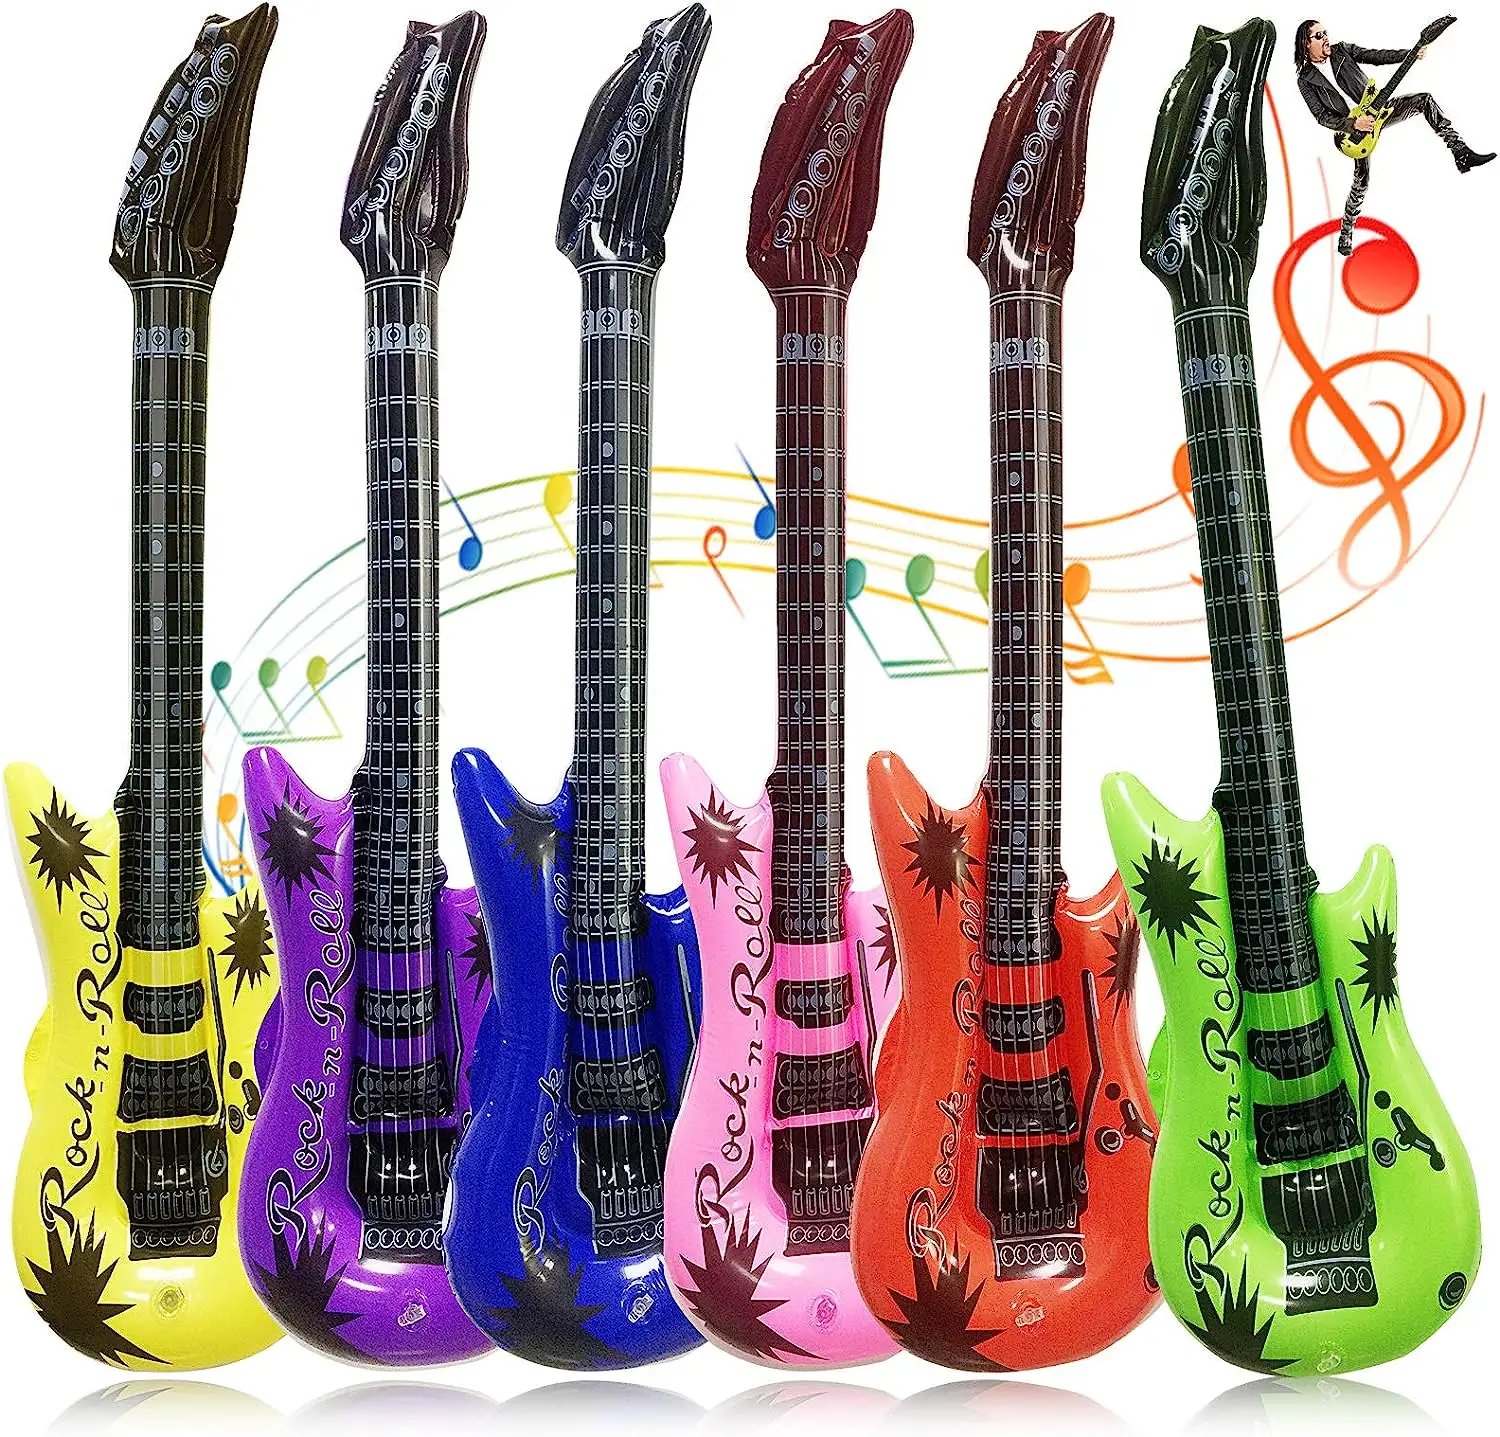 Guitarra inflable, juguetes de guitarra inflables reutilizables de 36 pulgadas, guitarra inflable de colores surtidos para niños